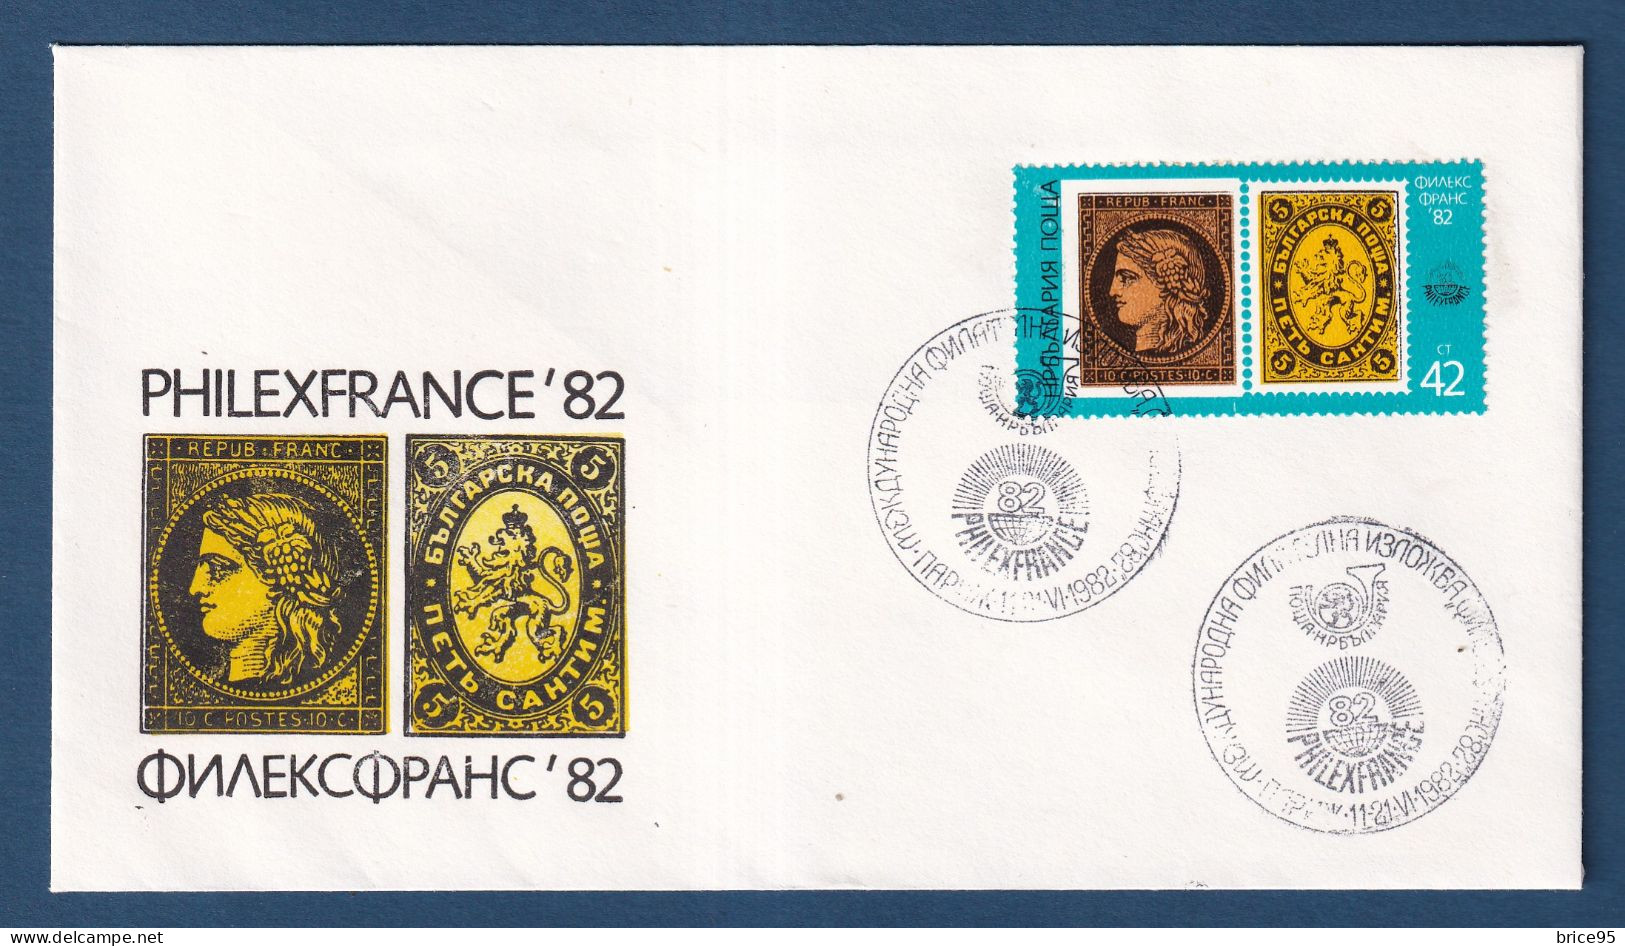 Ukraine - FDC - Premier Jour - Entier Postal - PhilexFrance 82 - 1982 - Ukraine